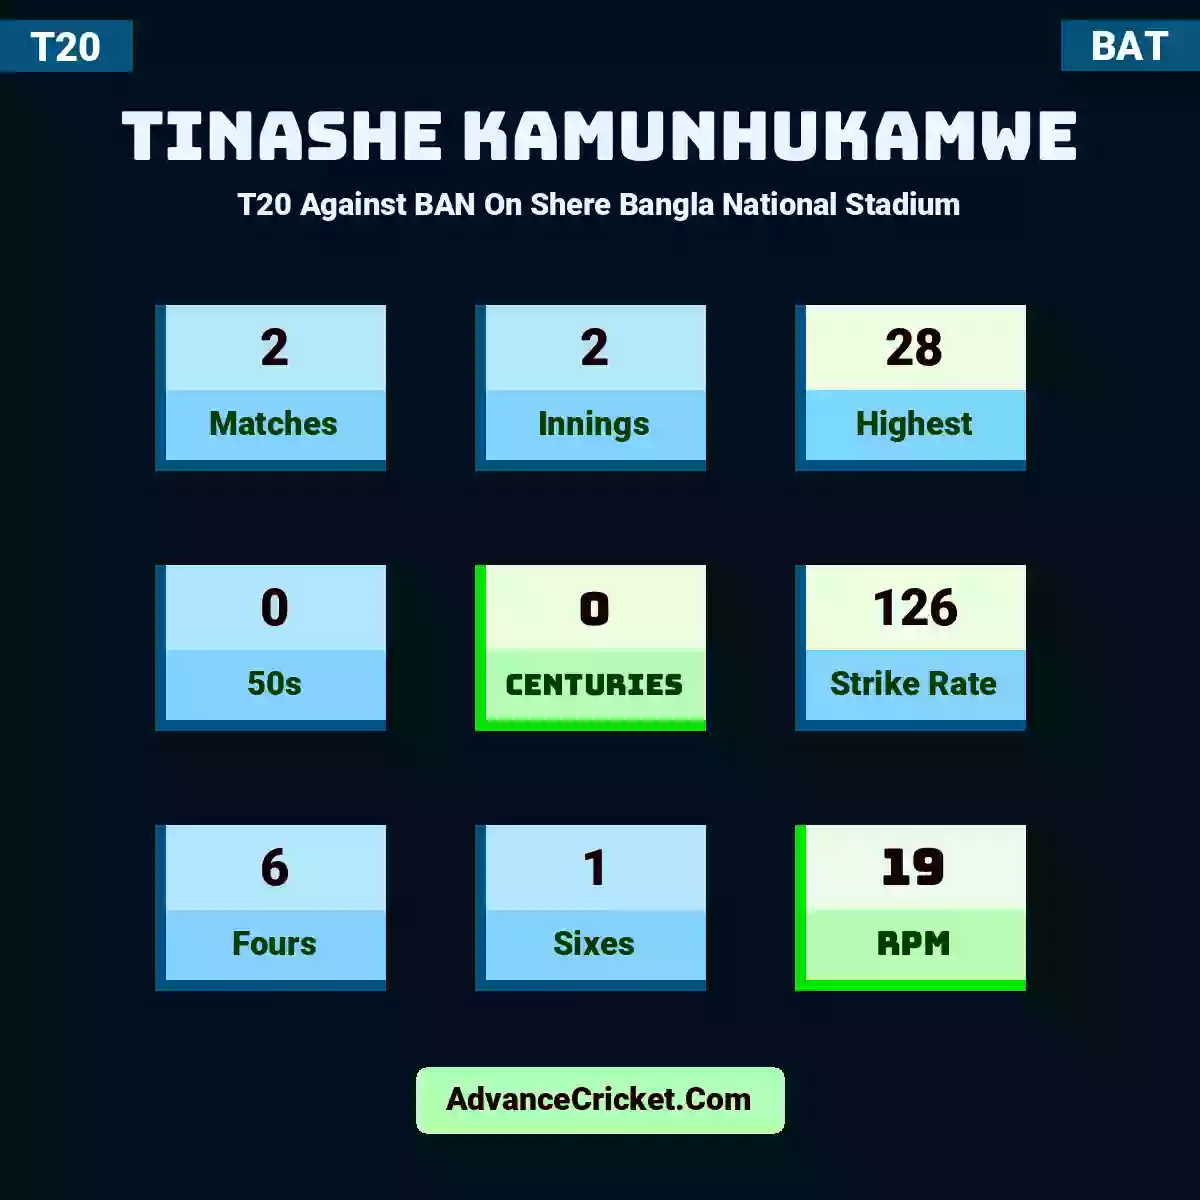 Tinashe Kamunhukamwe T20  Against BAN On Shere Bangla National Stadium, Tinashe Kamunhukamwe played 2 matches, scored 28 runs as highest, 0 half-centuries, and 0 centuries, with a strike rate of 126. T.Kamunhukamwe hit 6 fours and 1 sixes, with an RPM of 19.